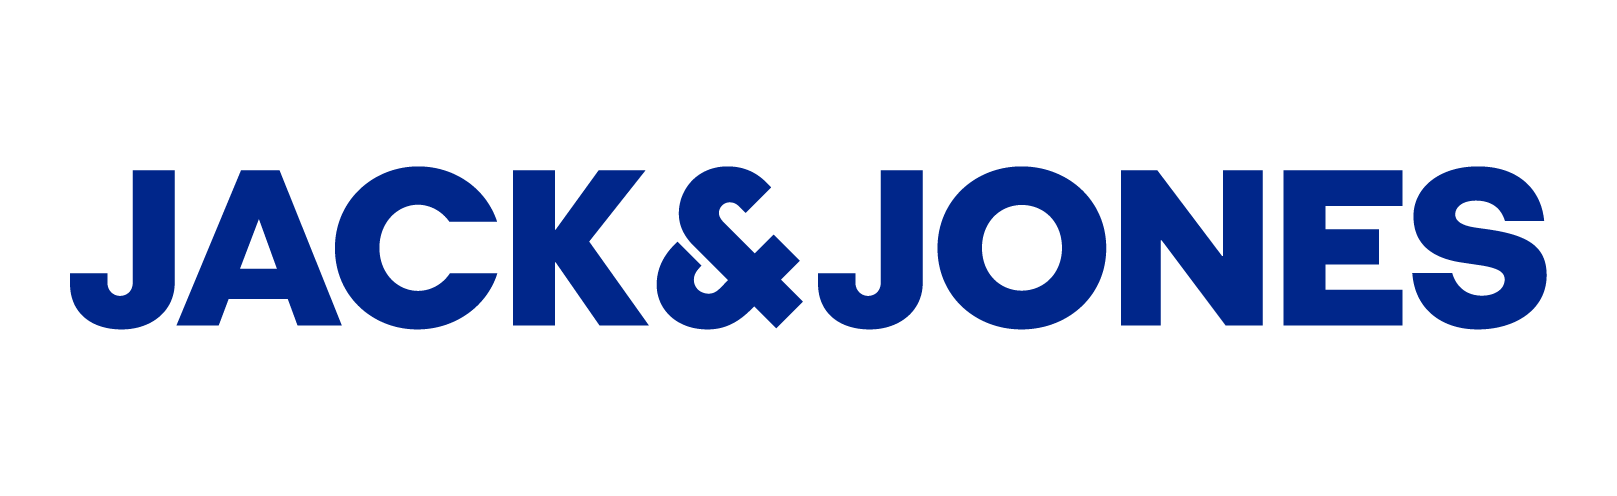 jack&jones-logo